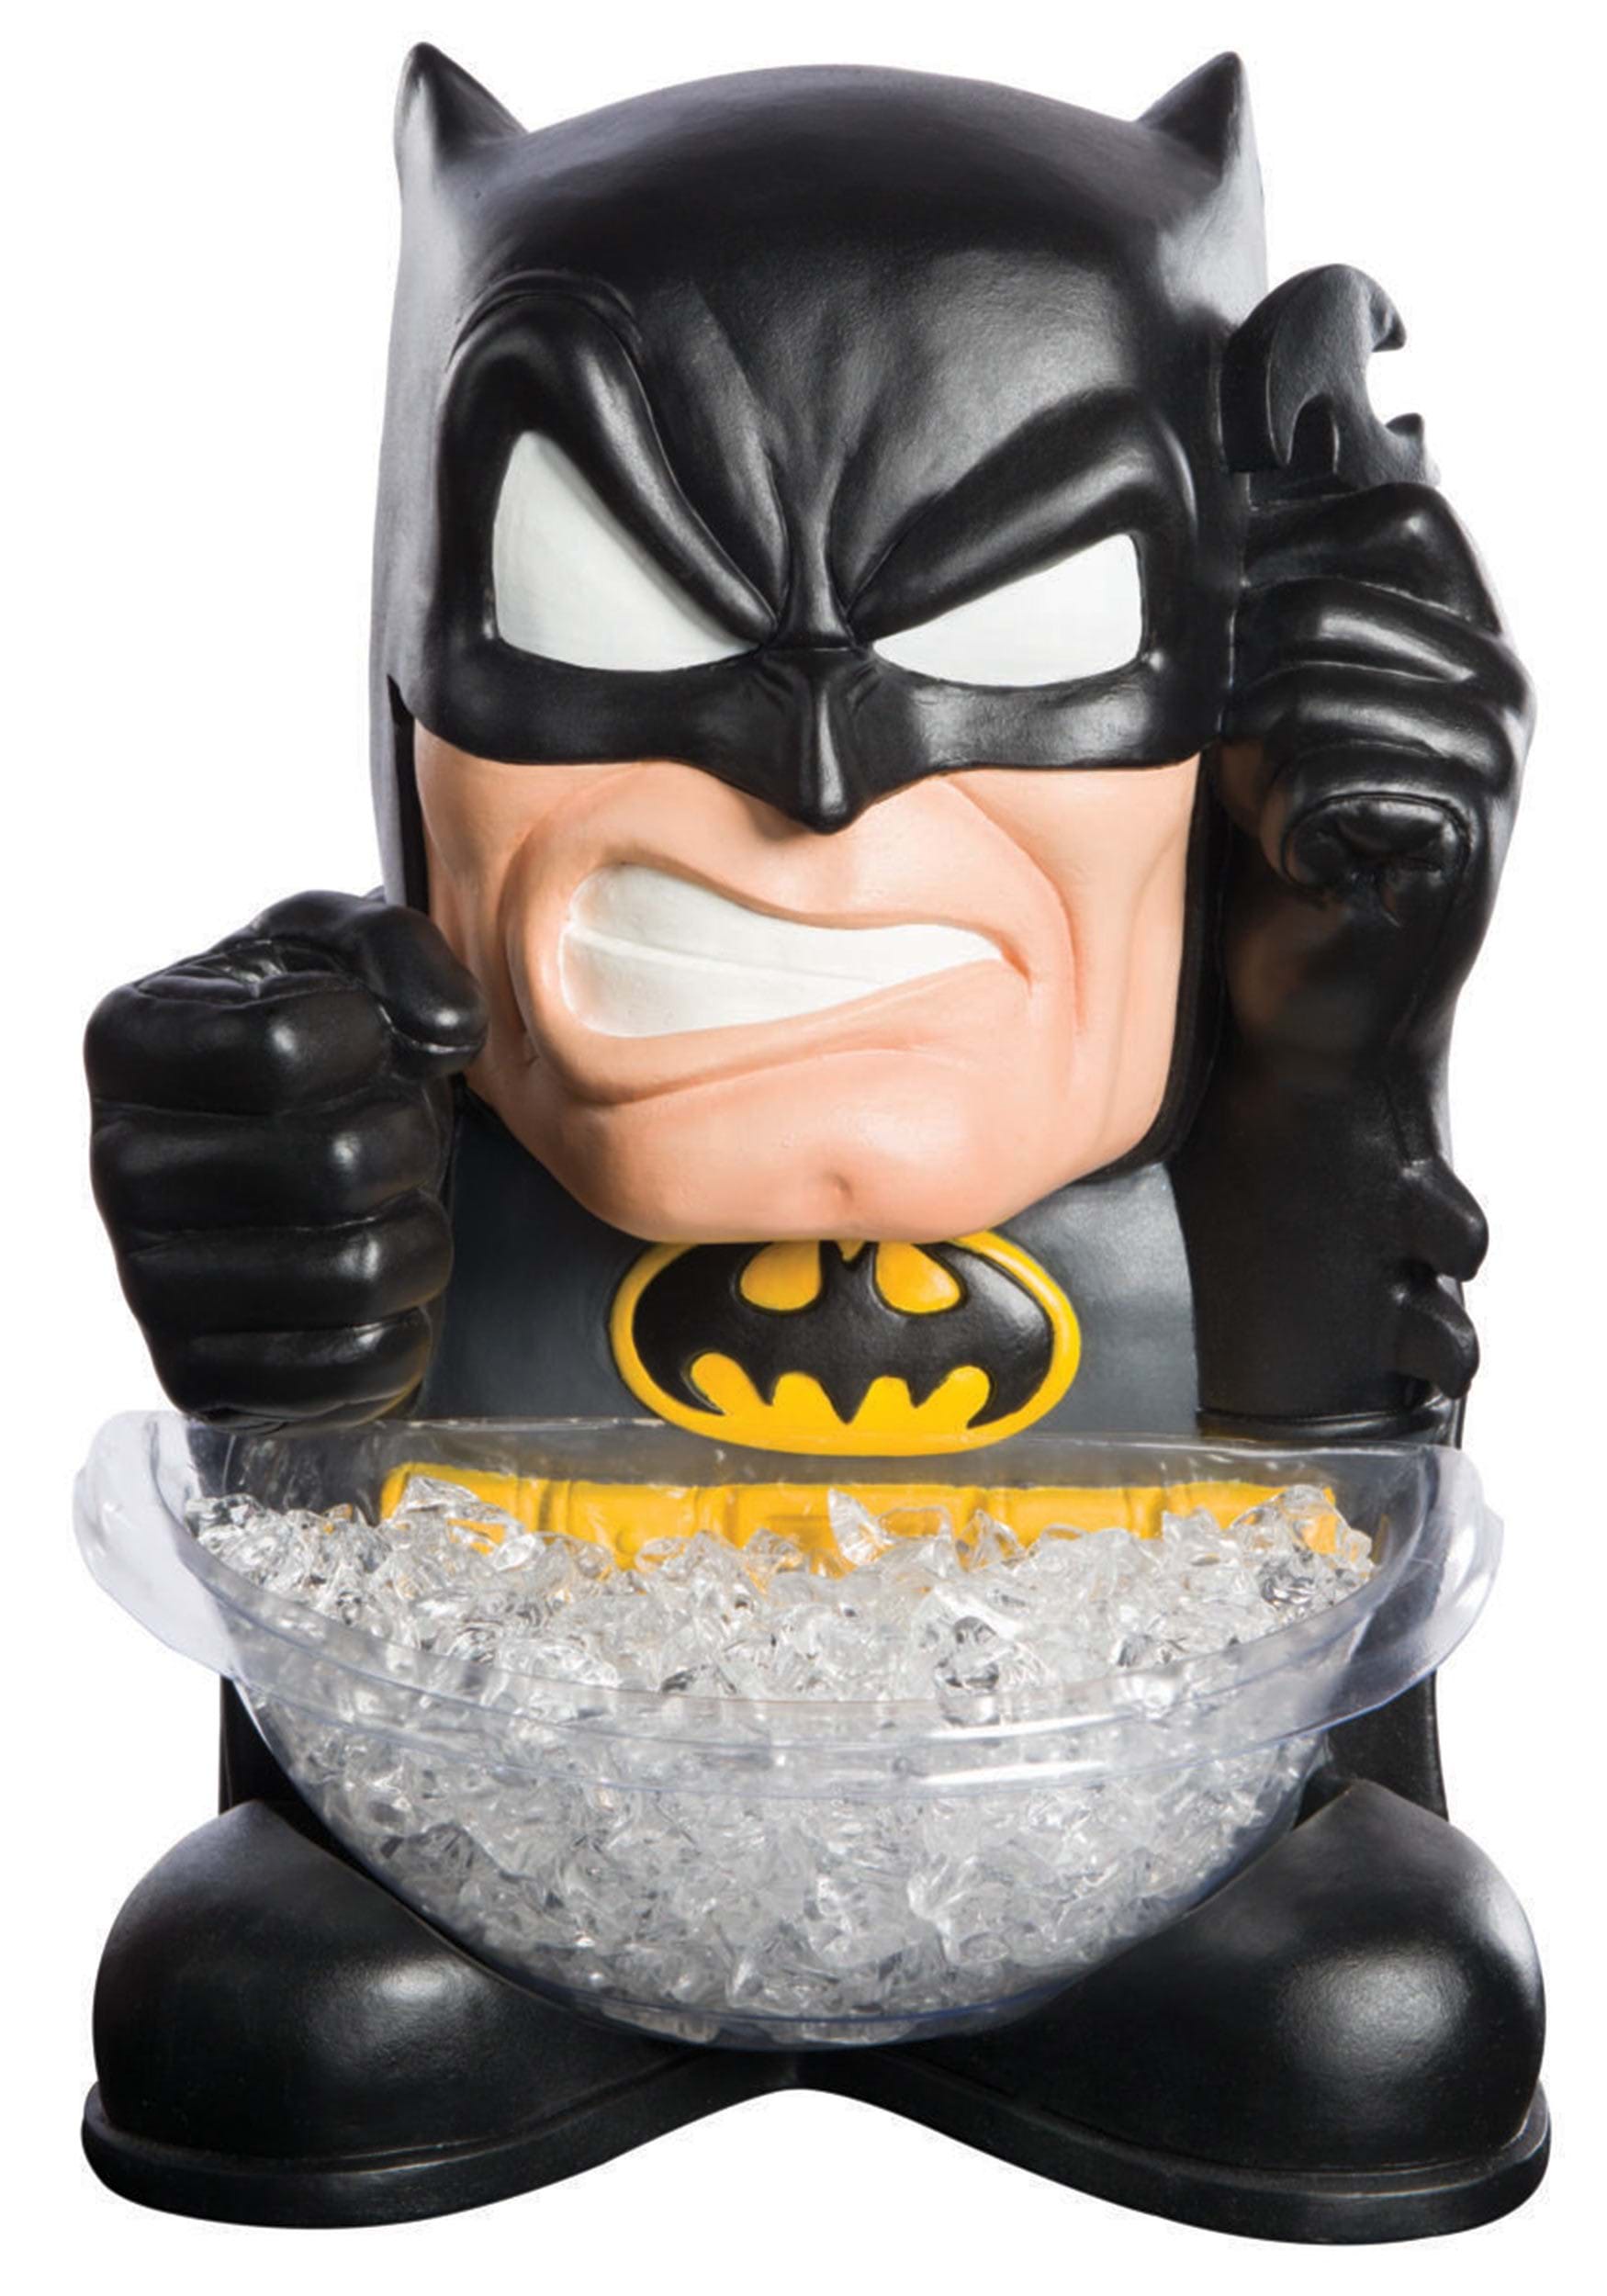 Batman Treat Bowl Holder